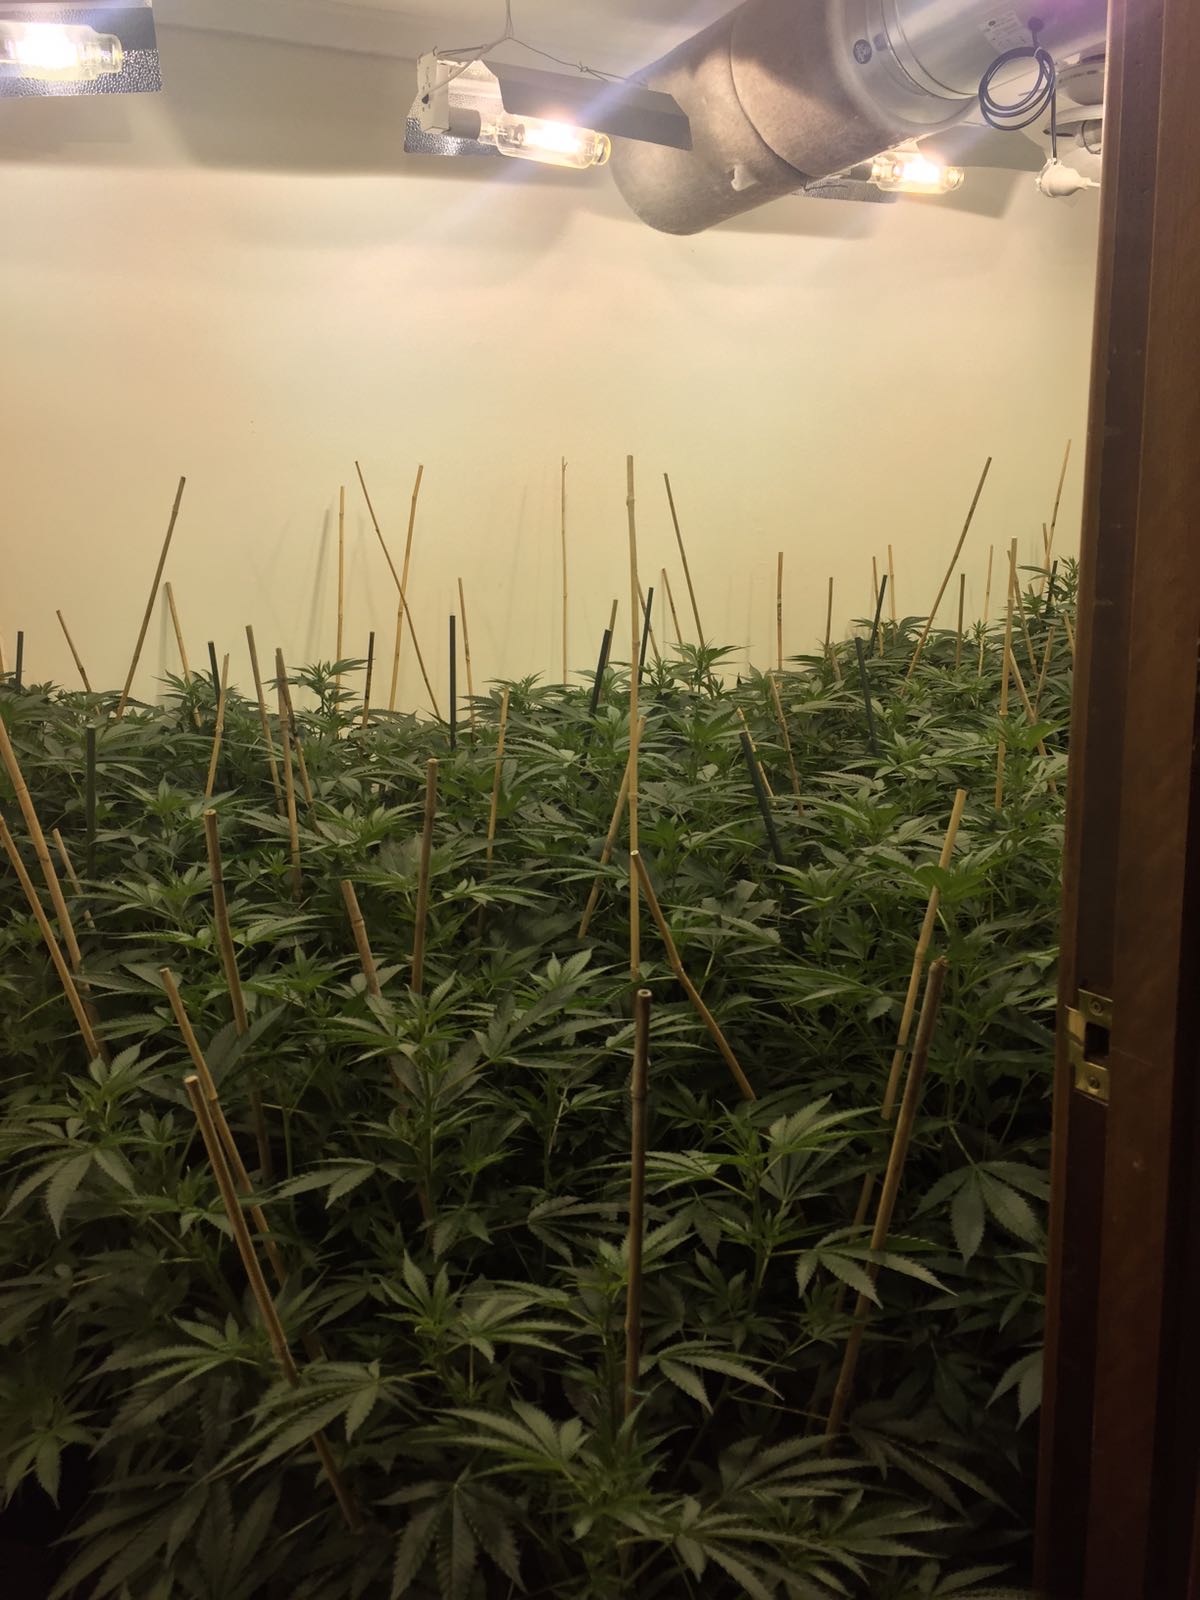 Cannabis grow house (supplied by WA Police)